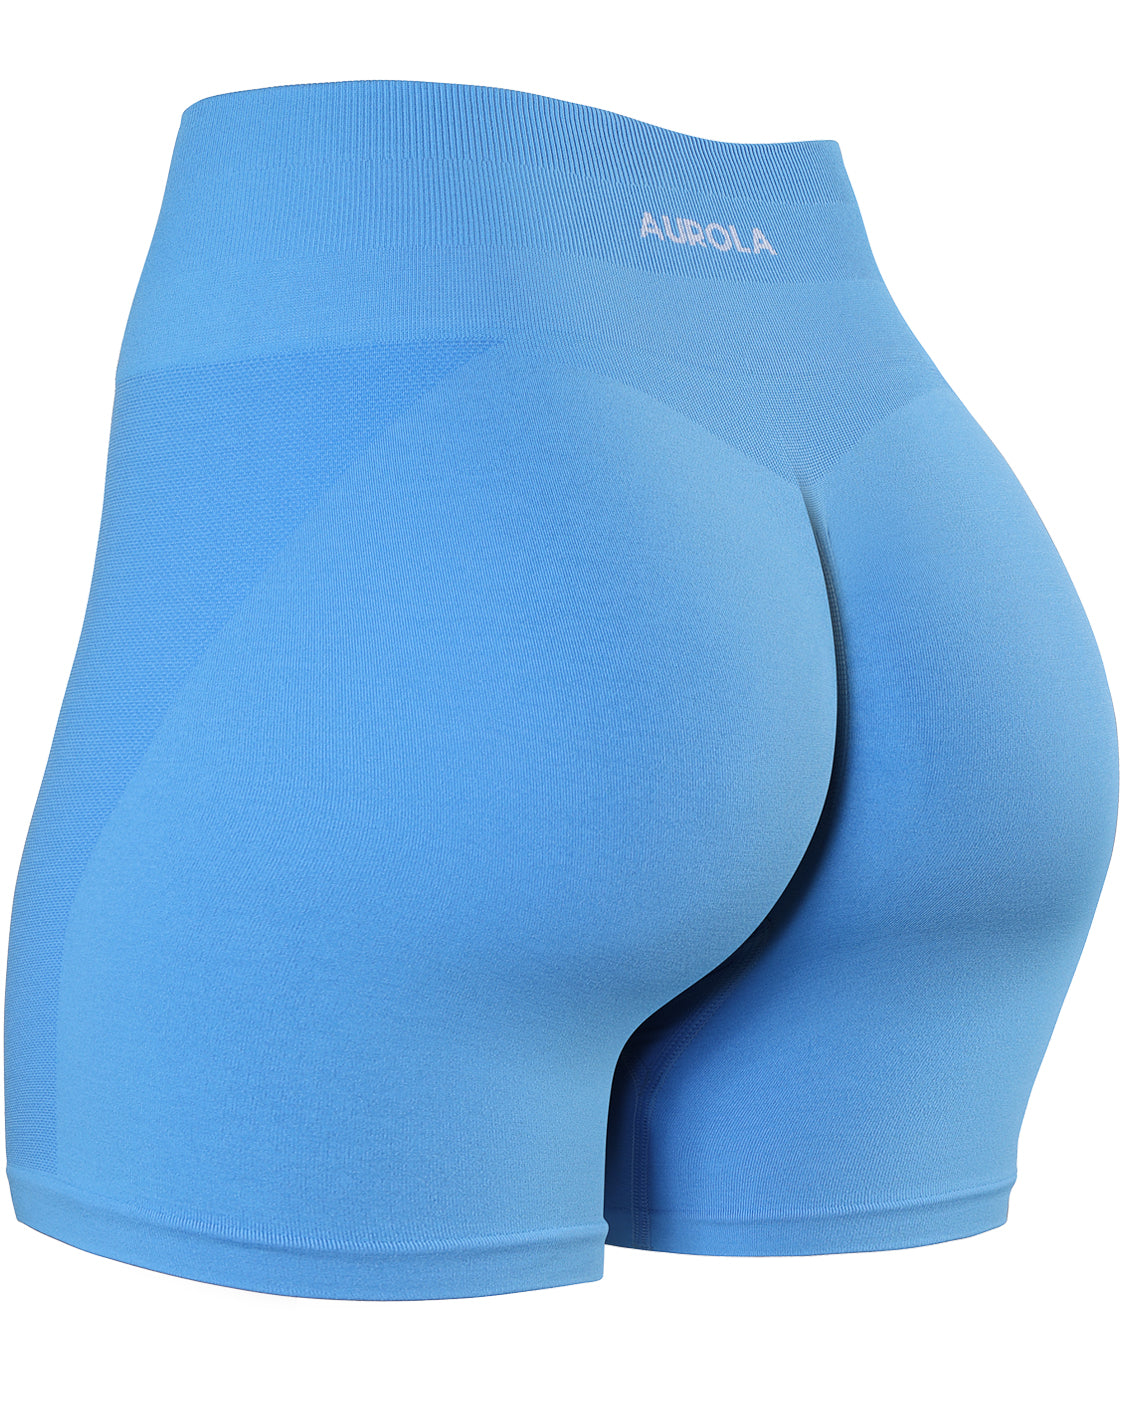 Buy AUROLA Intensify Workout Shorts for Women Seamless